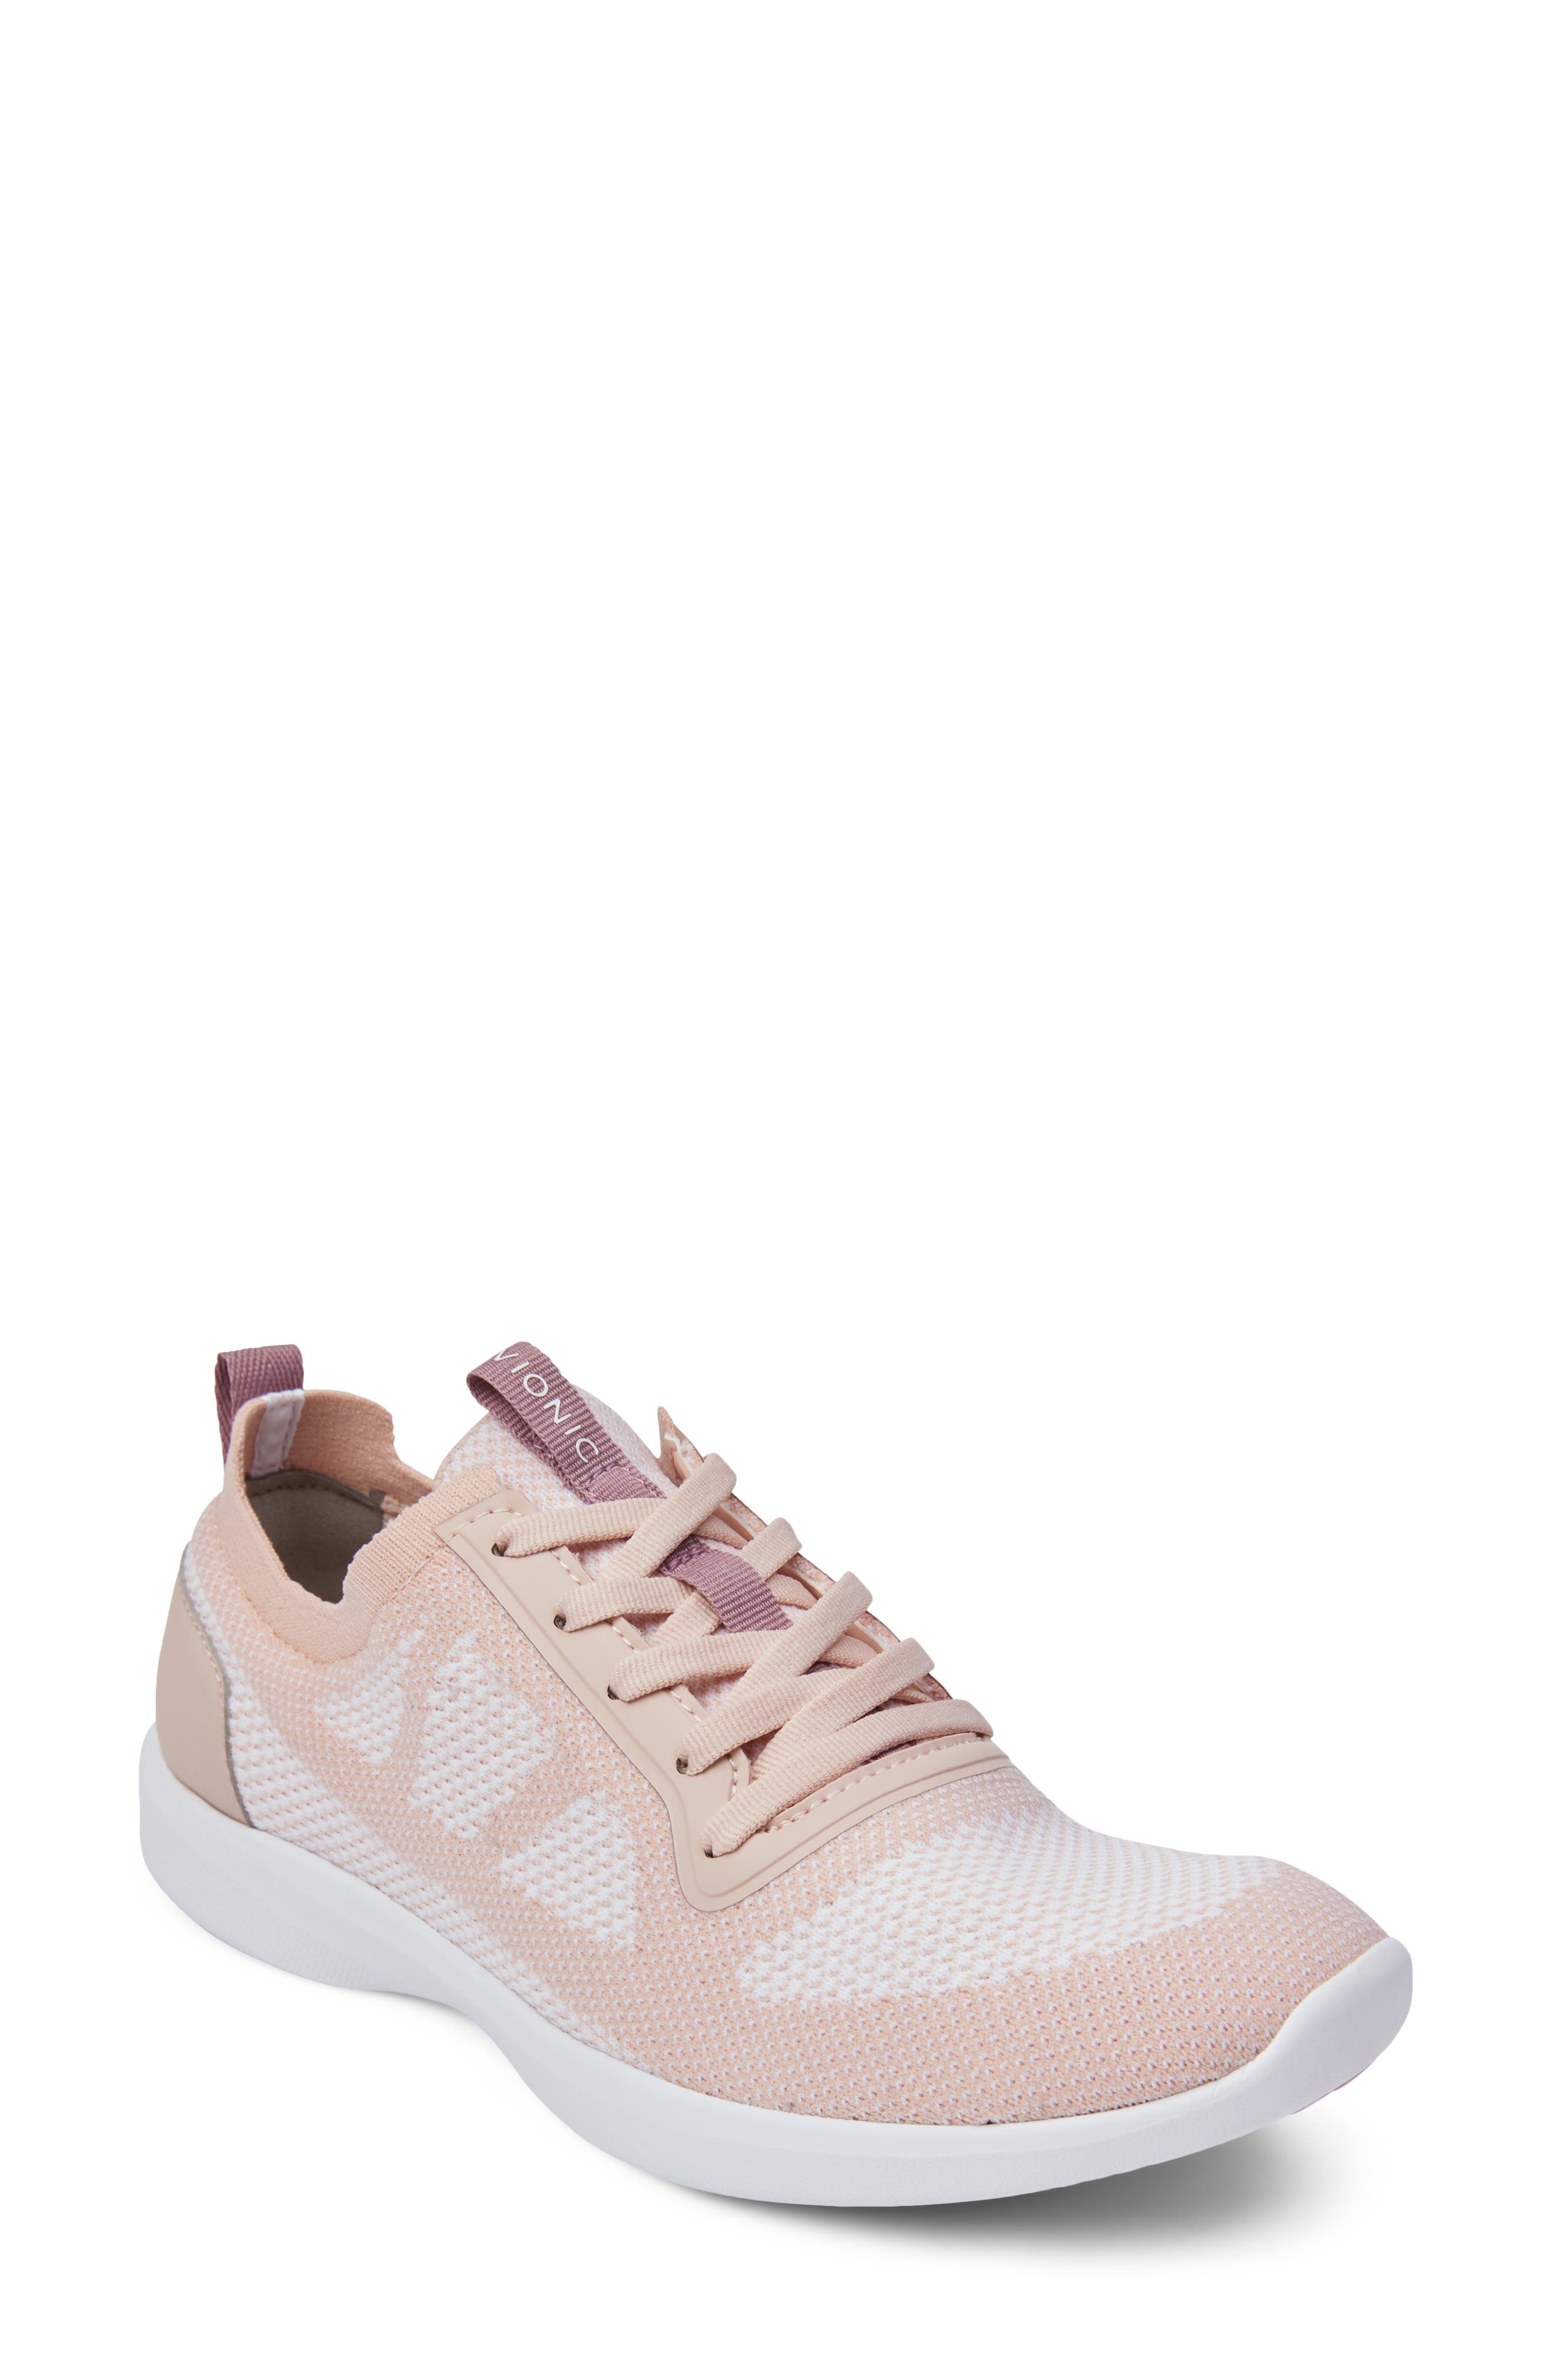 vionic pink sneakers